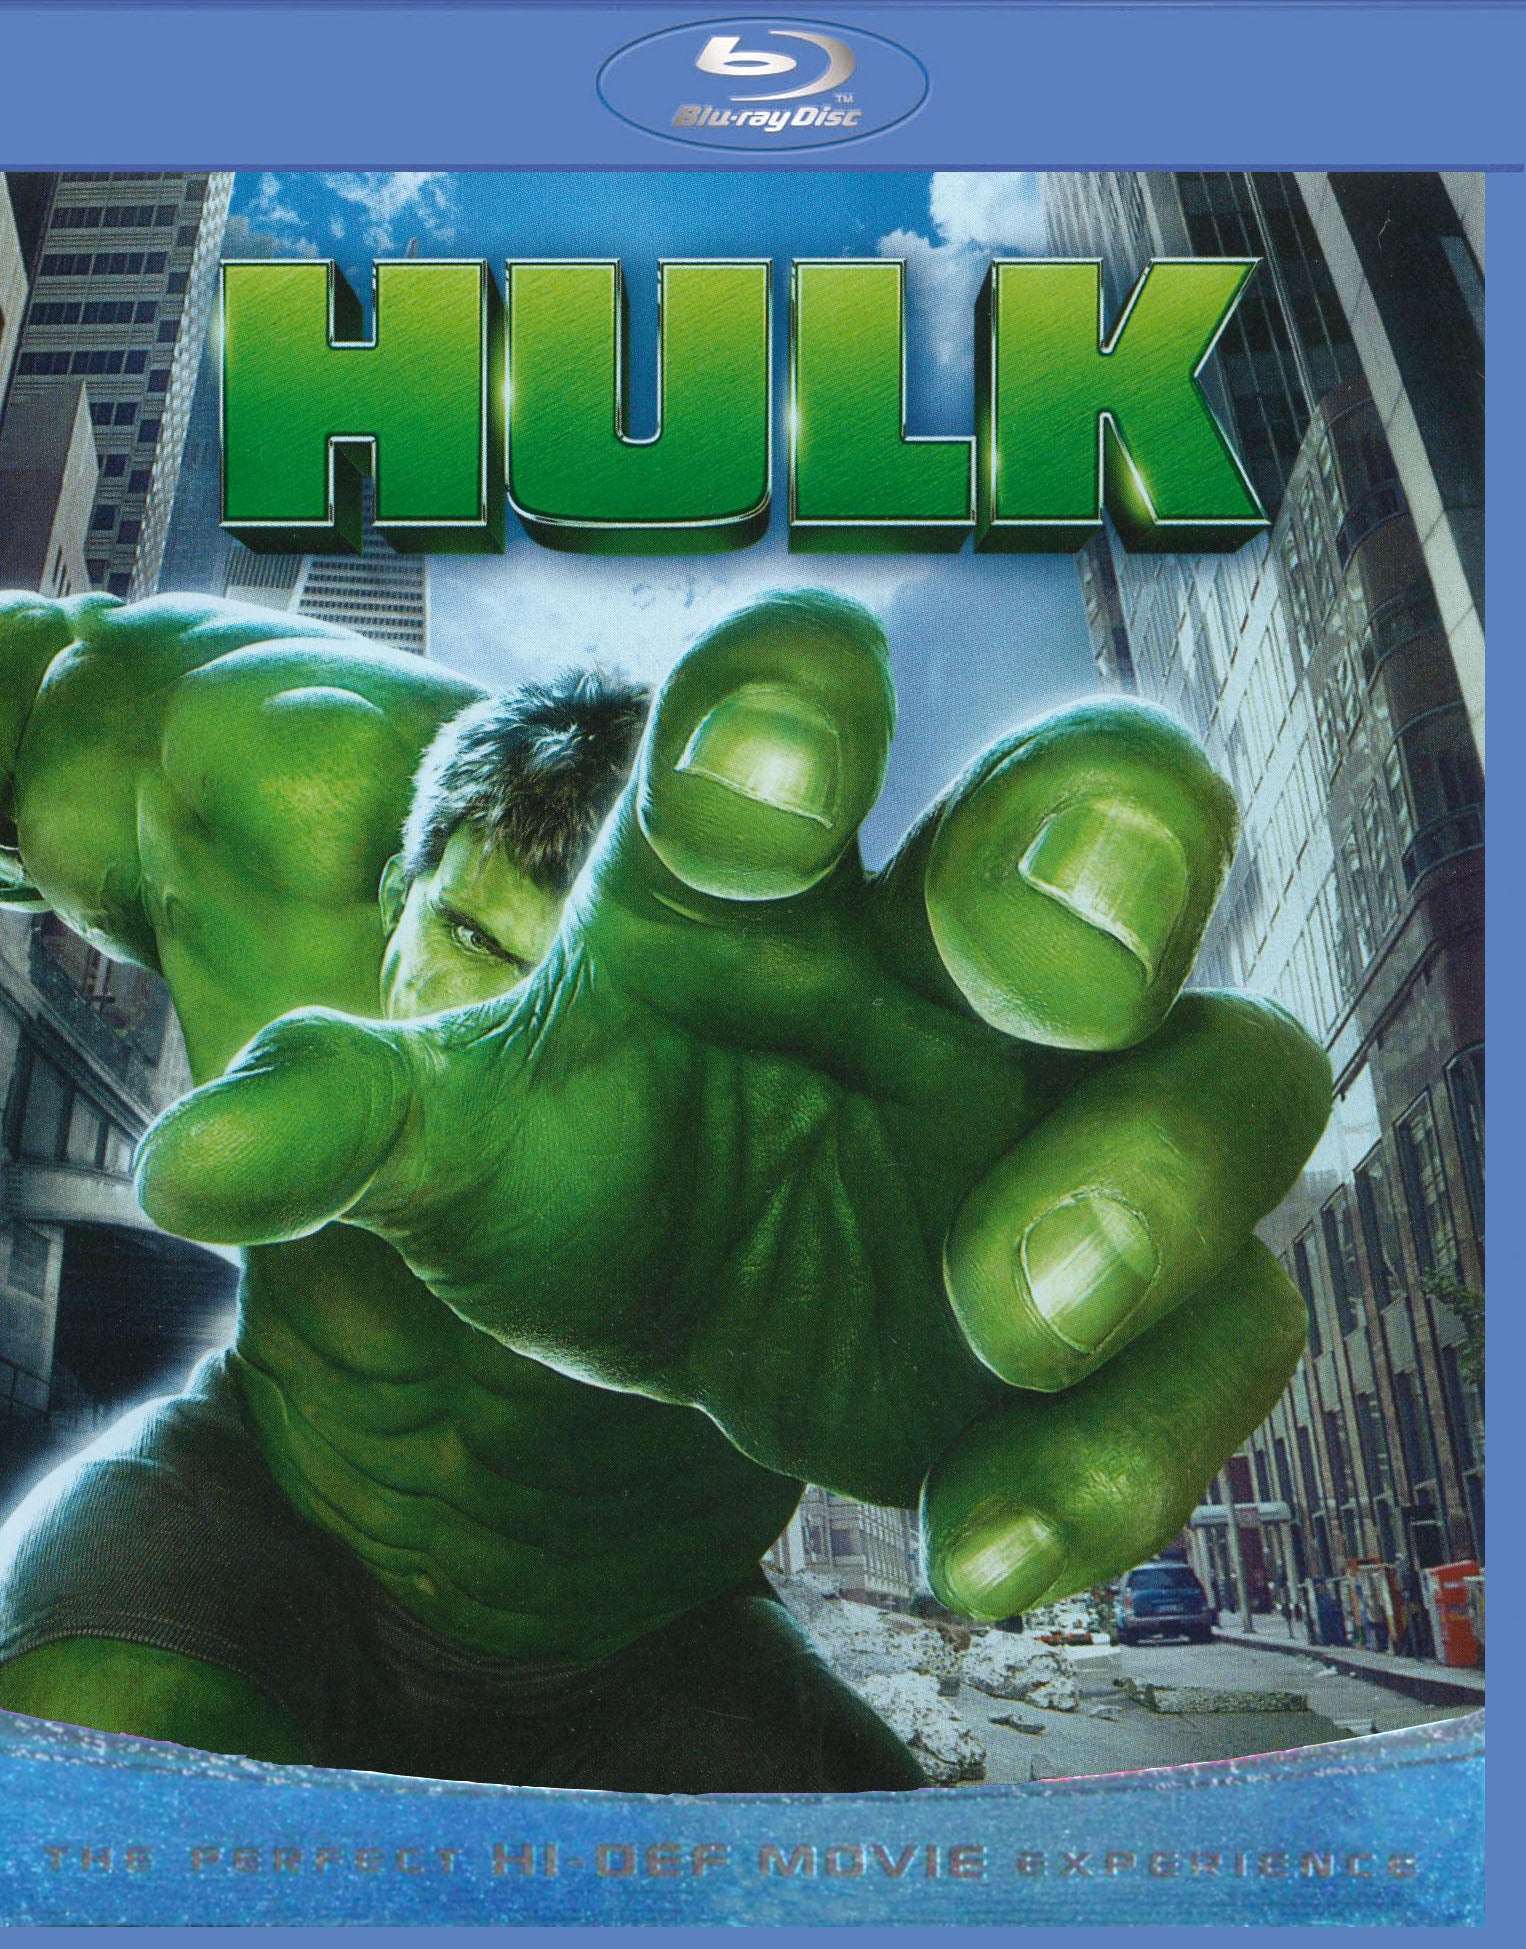 Hulk [Blu-ray] cover art